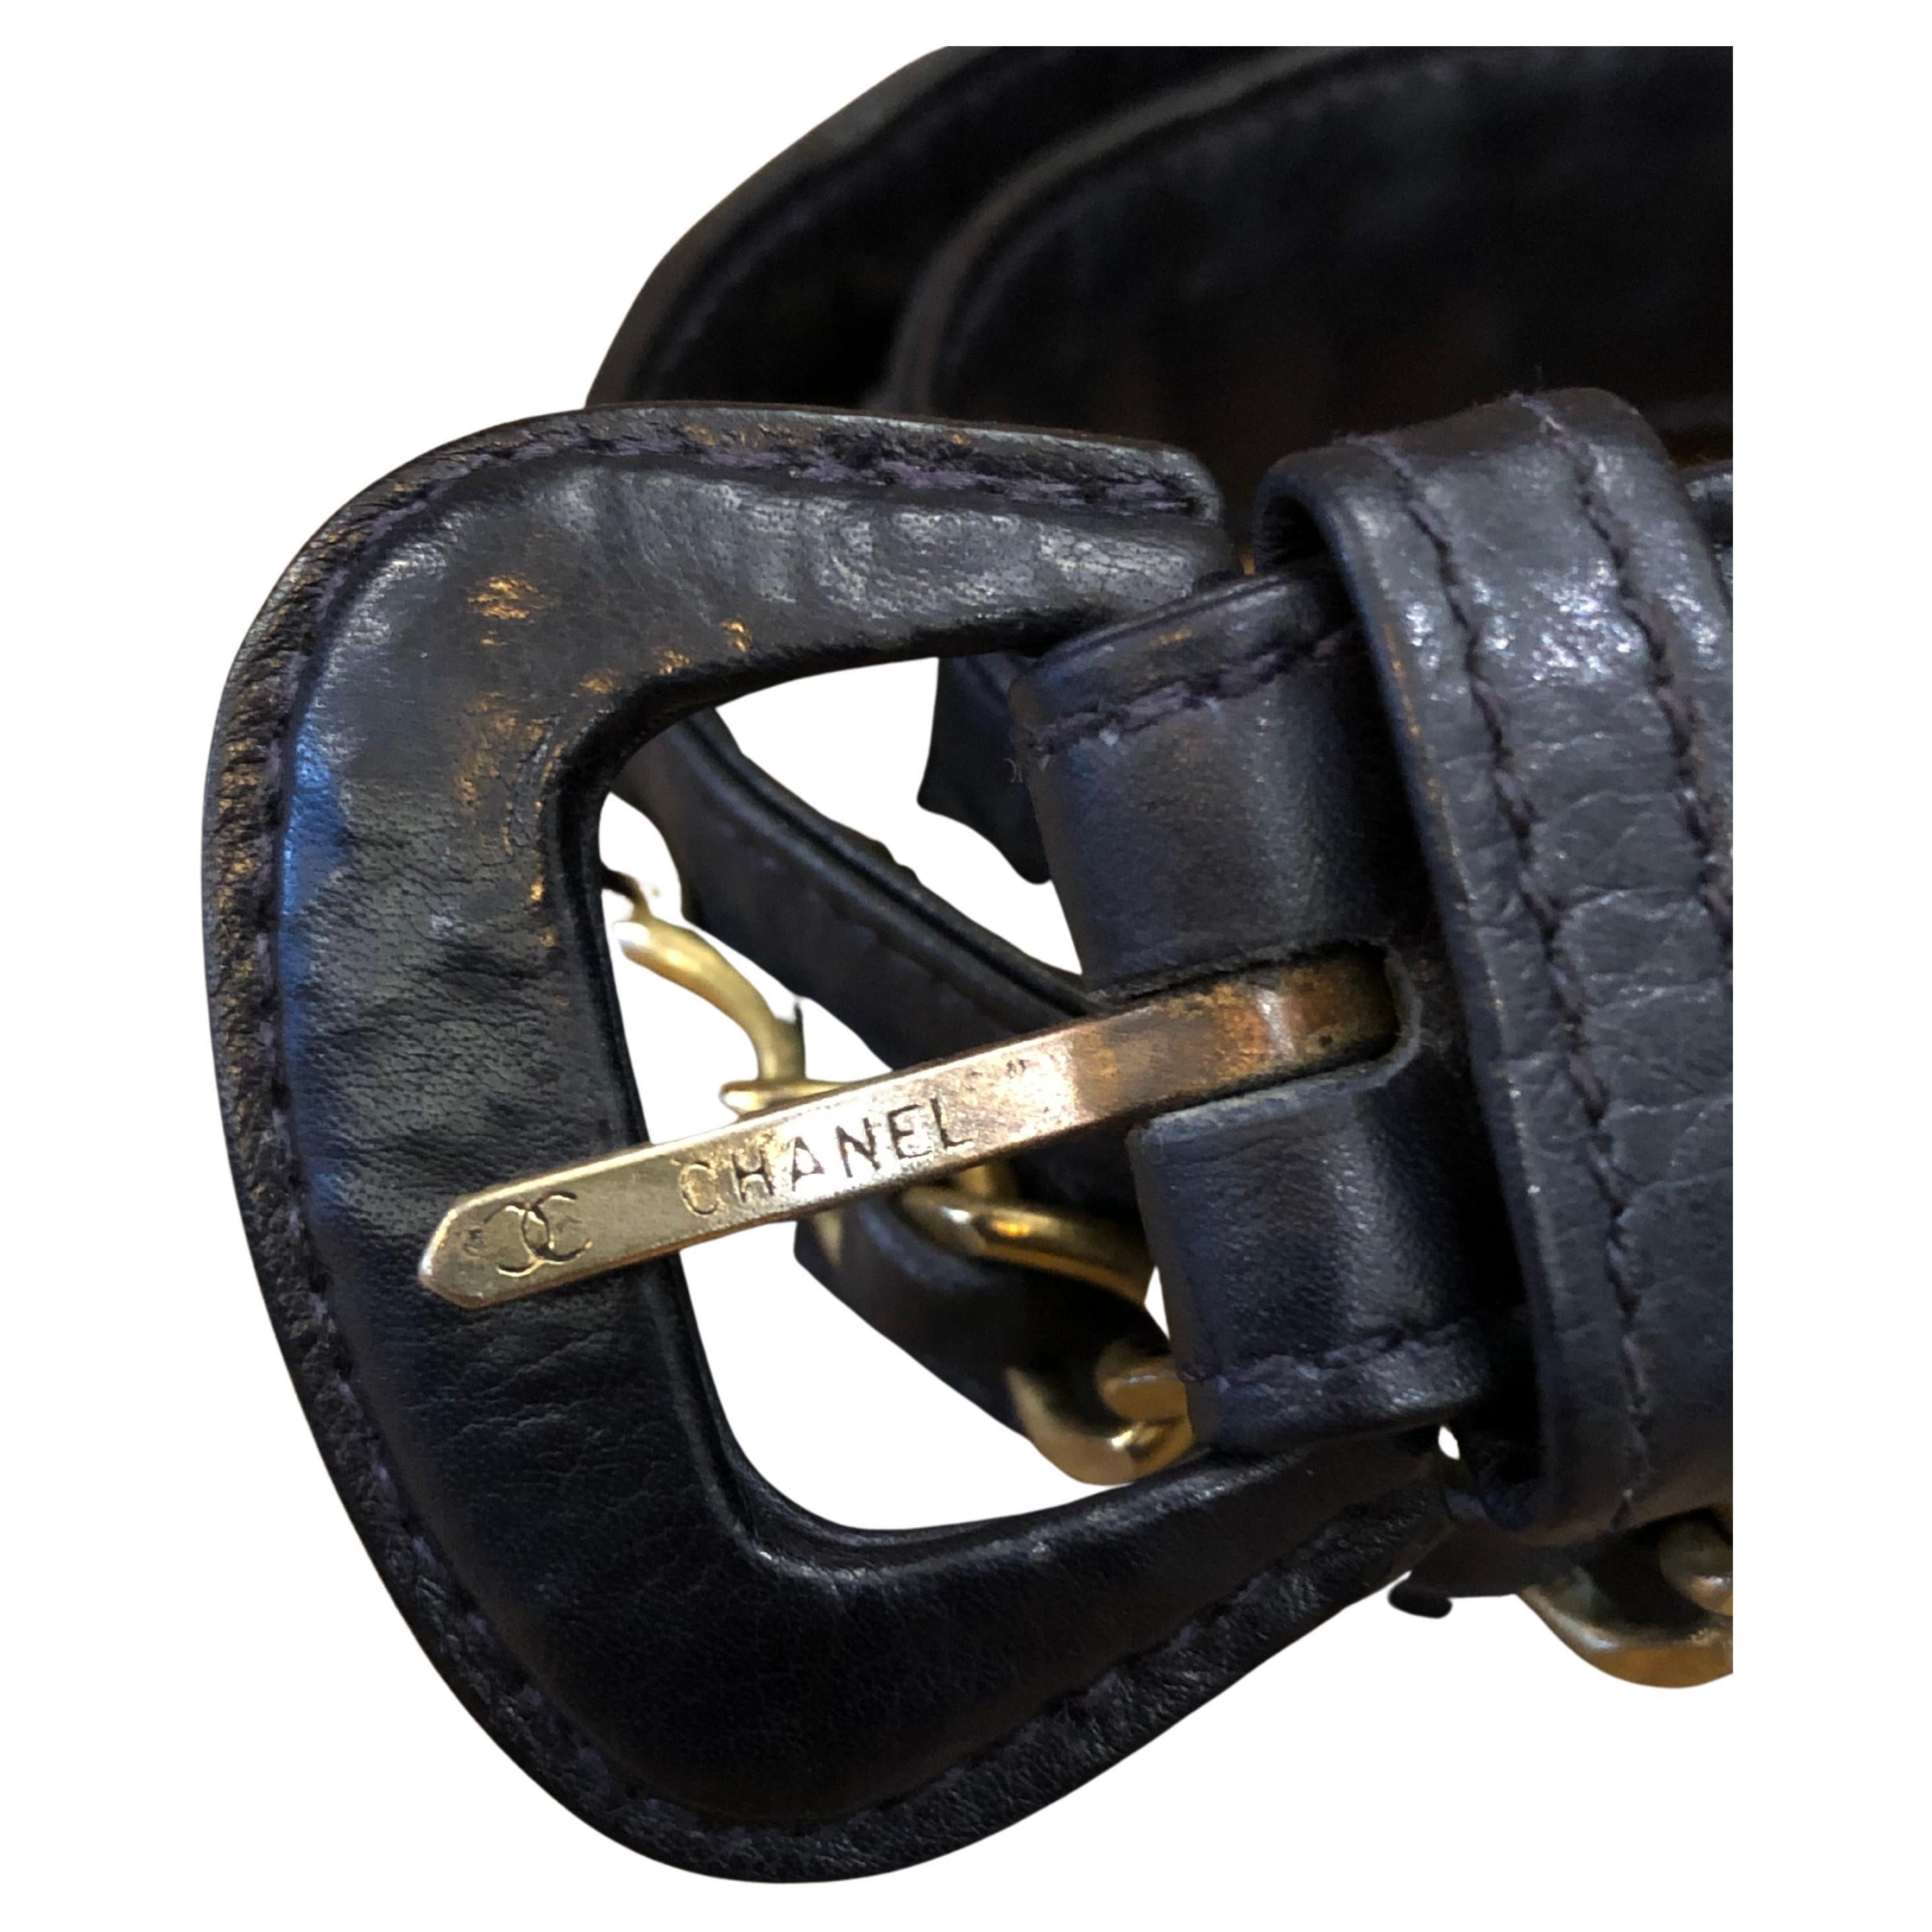 Women's 1980s Vintage CHANEL Navy Leather Chain Belt for CHANEL Belt Bag